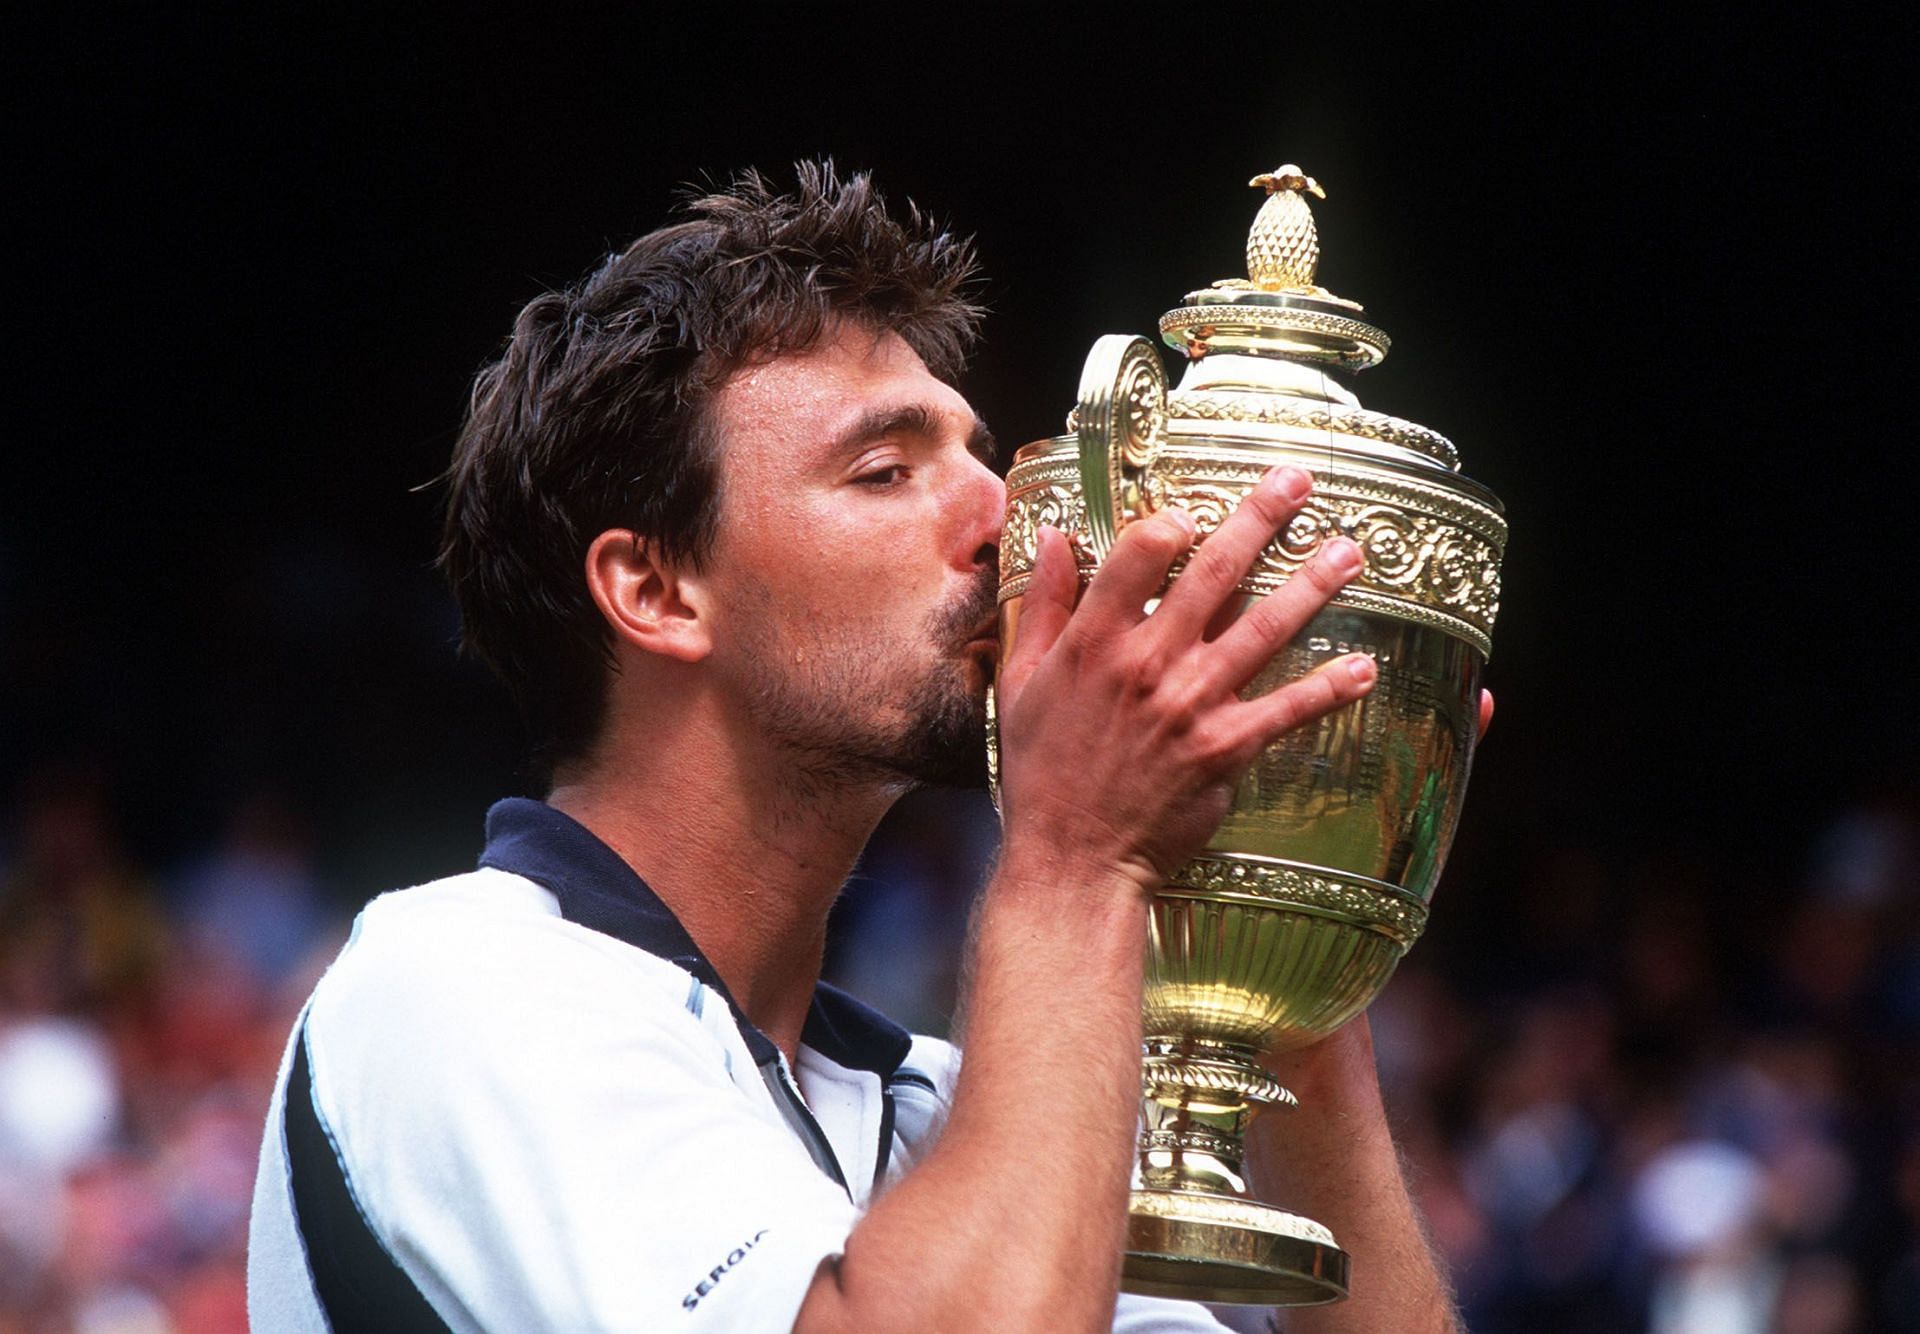 Goran Ivanisevic at the 2001 Wimbledon Championships